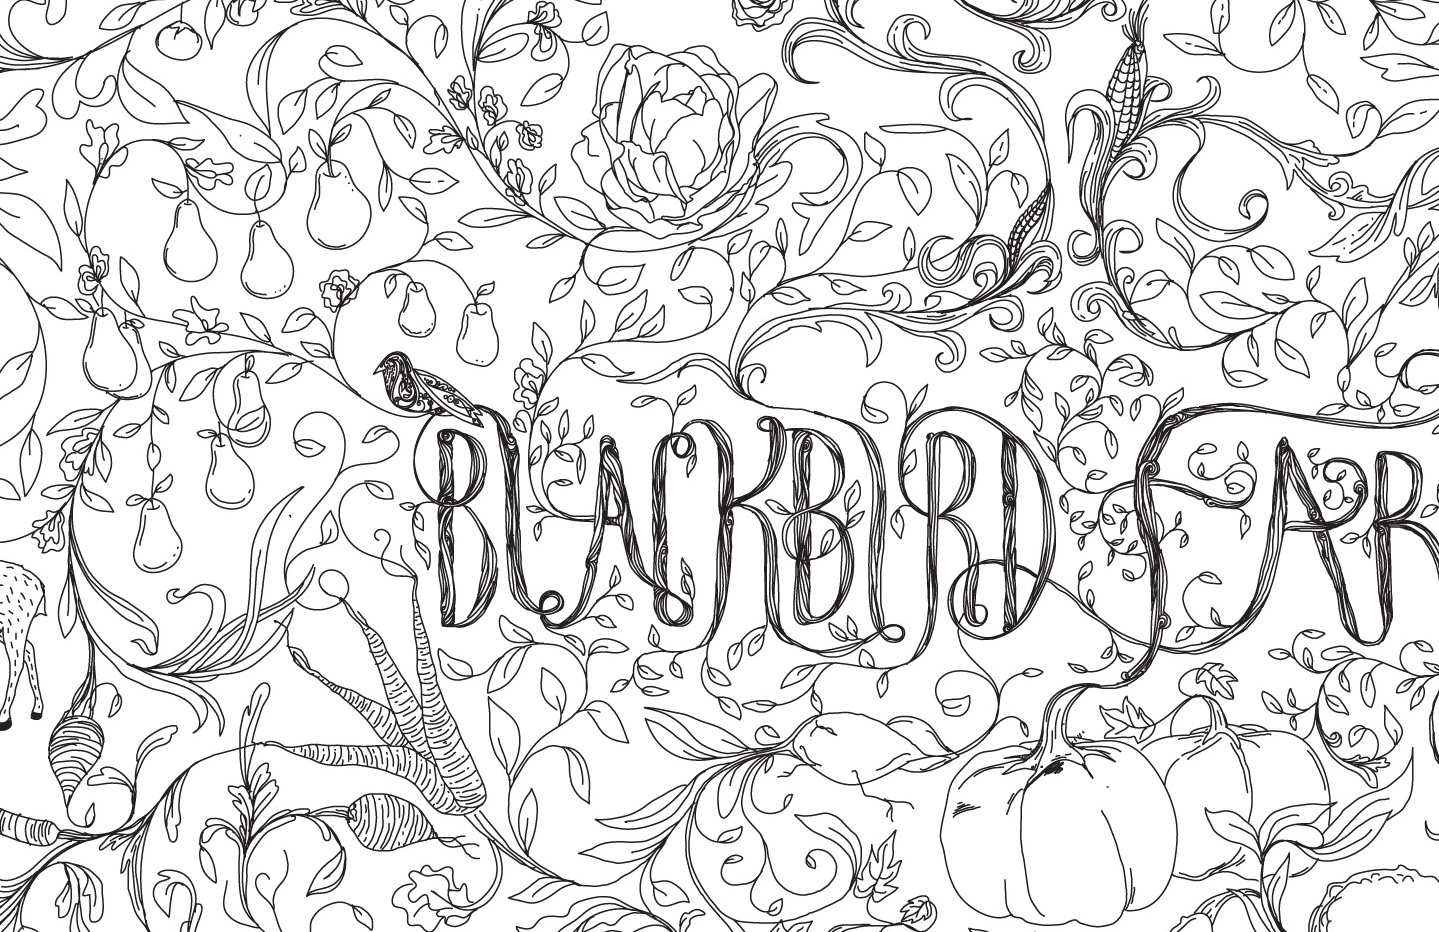 Blackbird_Farm_Art_detail.jpg